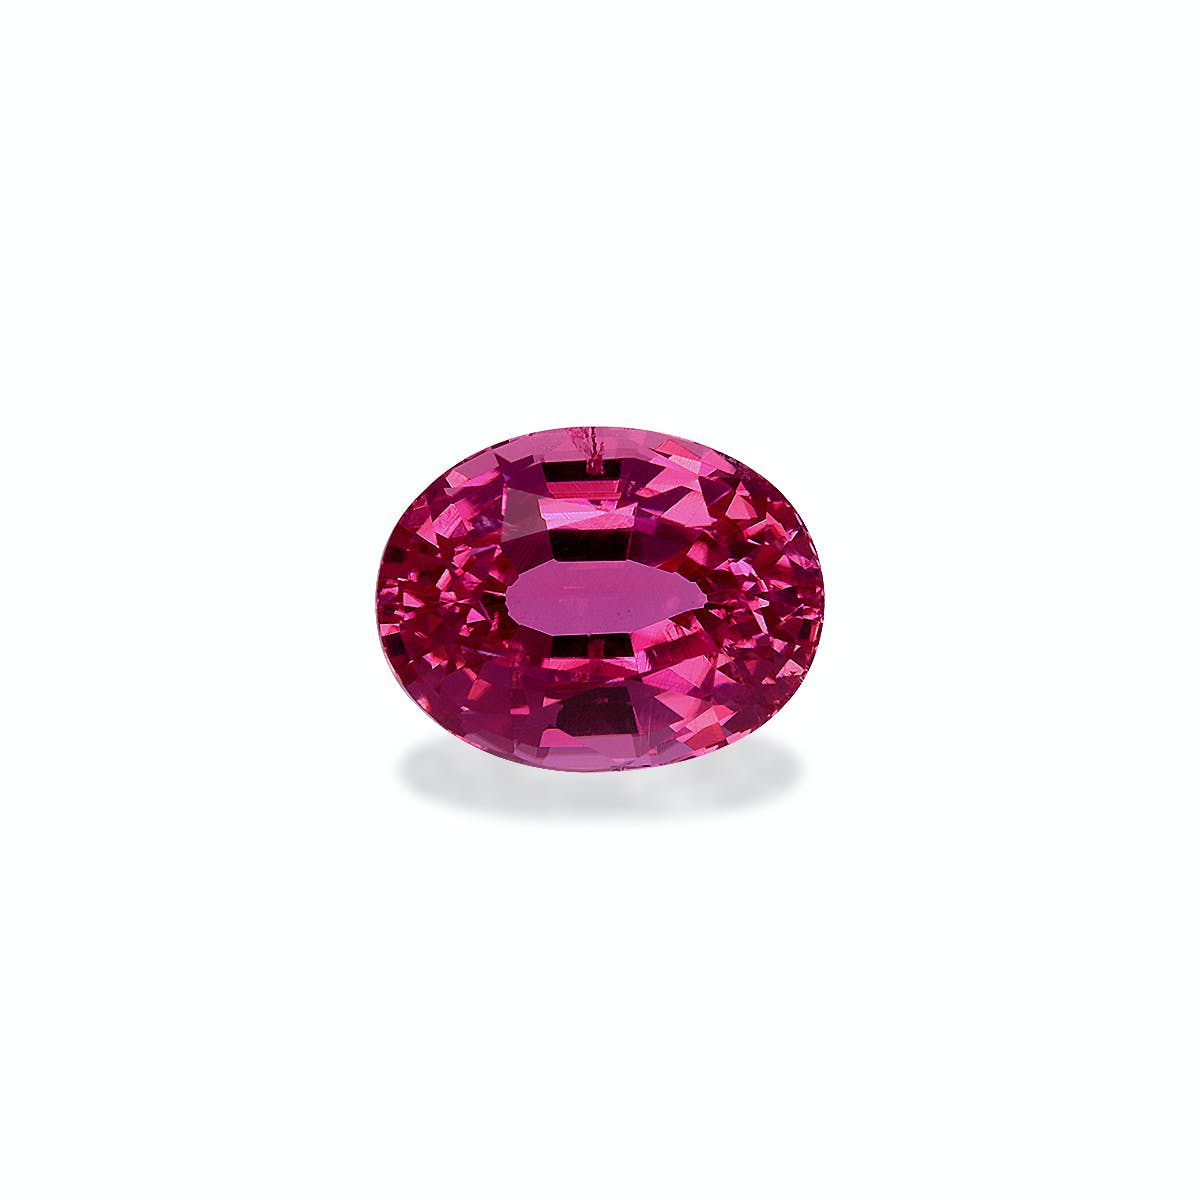 Picture of Fuscia Pink Rubellite Tourmaline 2.44ct - 9x7mm (RL1230)